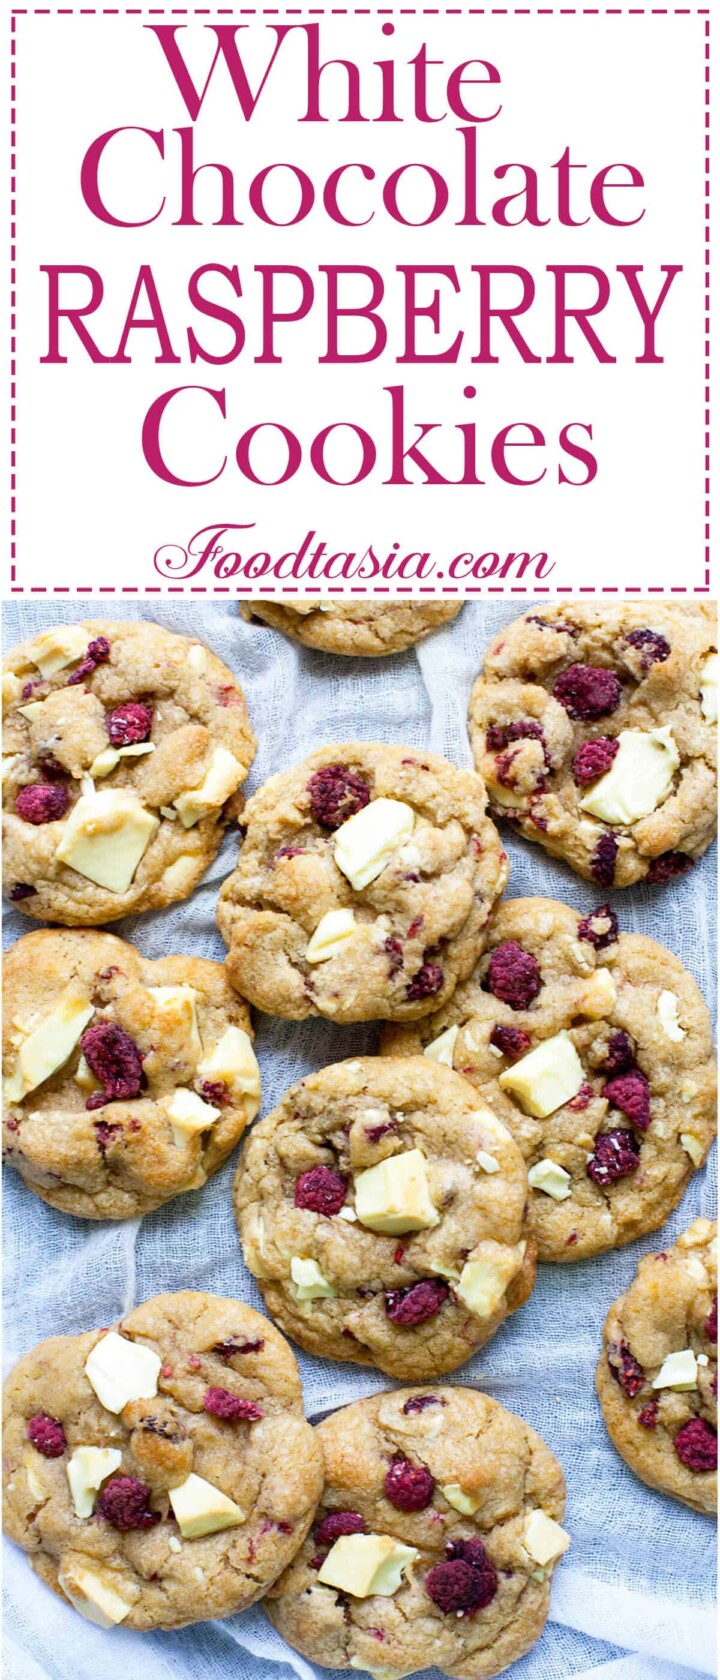 White Chocolate Raspberry Cookies | Foodtasia